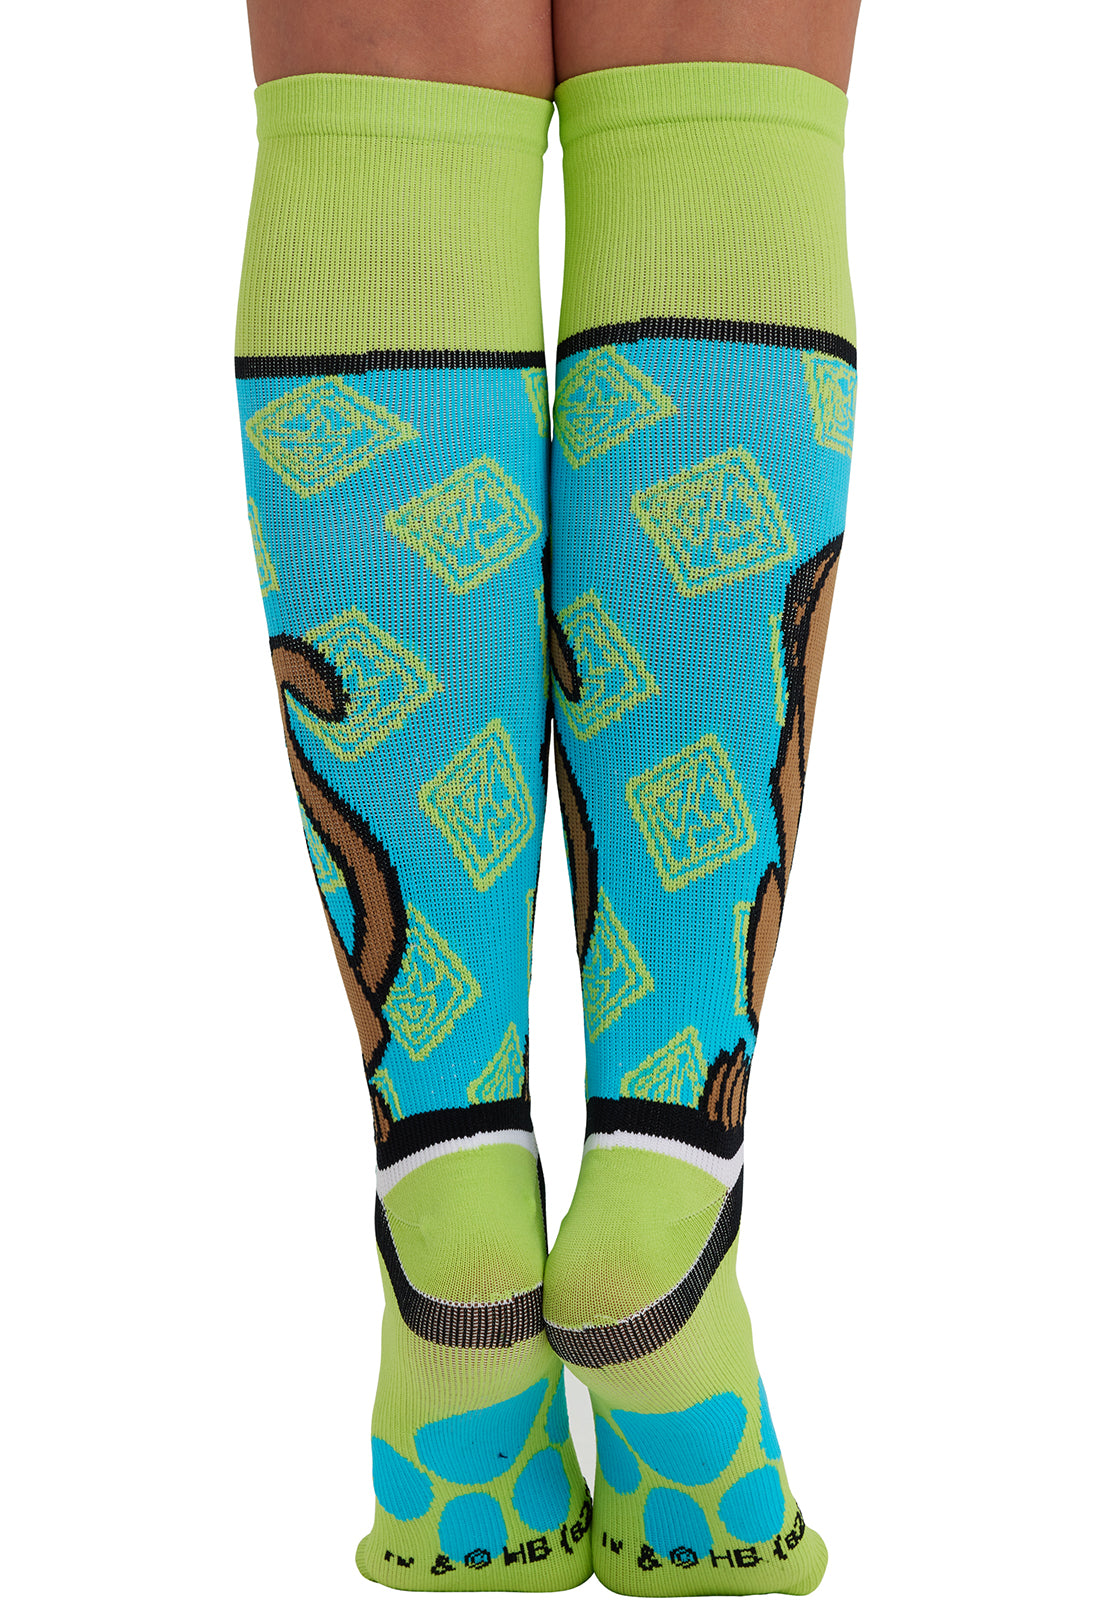 Women's 10-15mmHg Compression Socks Cartoon and Superhero Prints Compression Socks Cherokee Legwear   